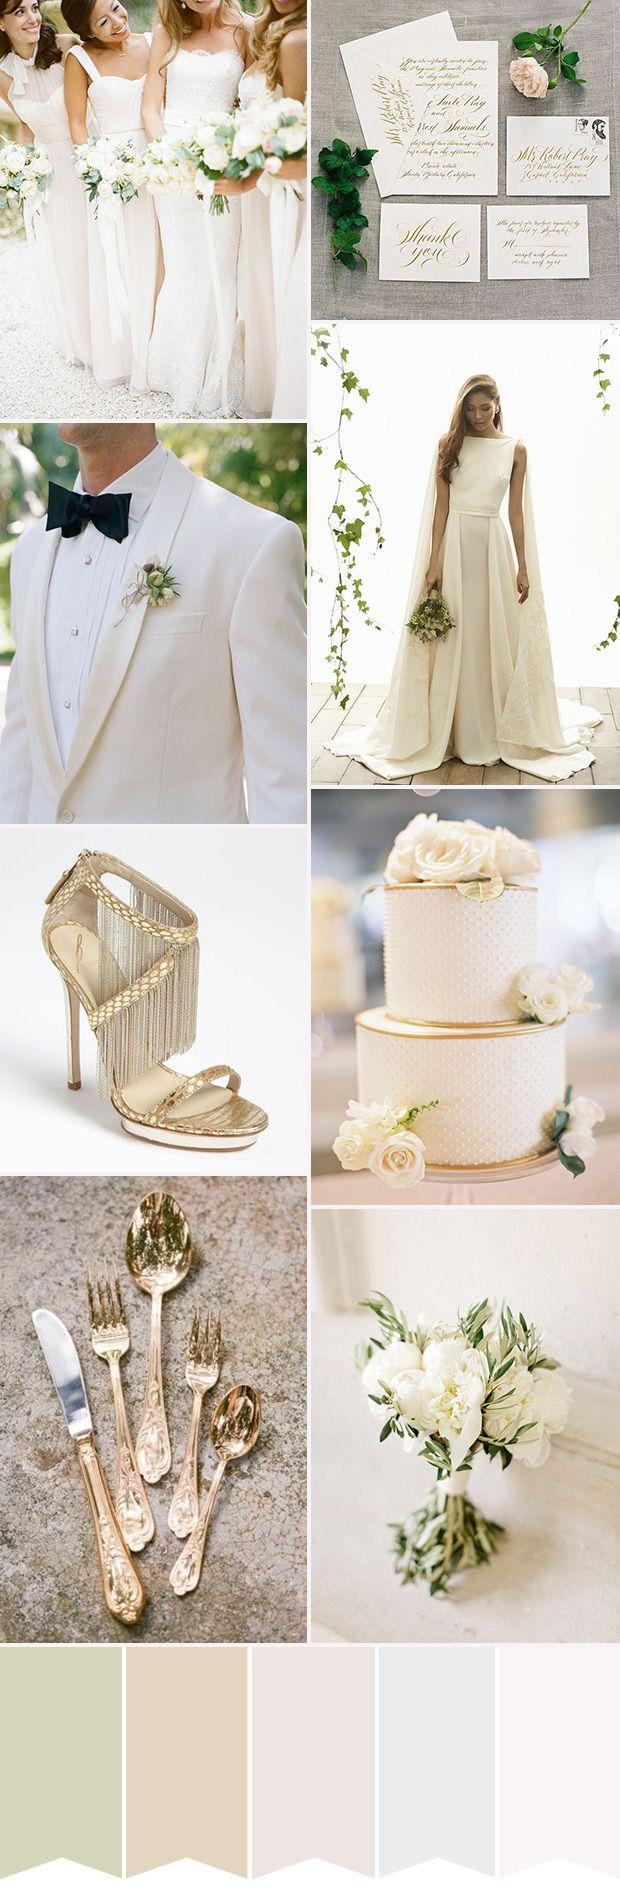 Mariage - The Ultimate Glam: White Wedding Inspiration